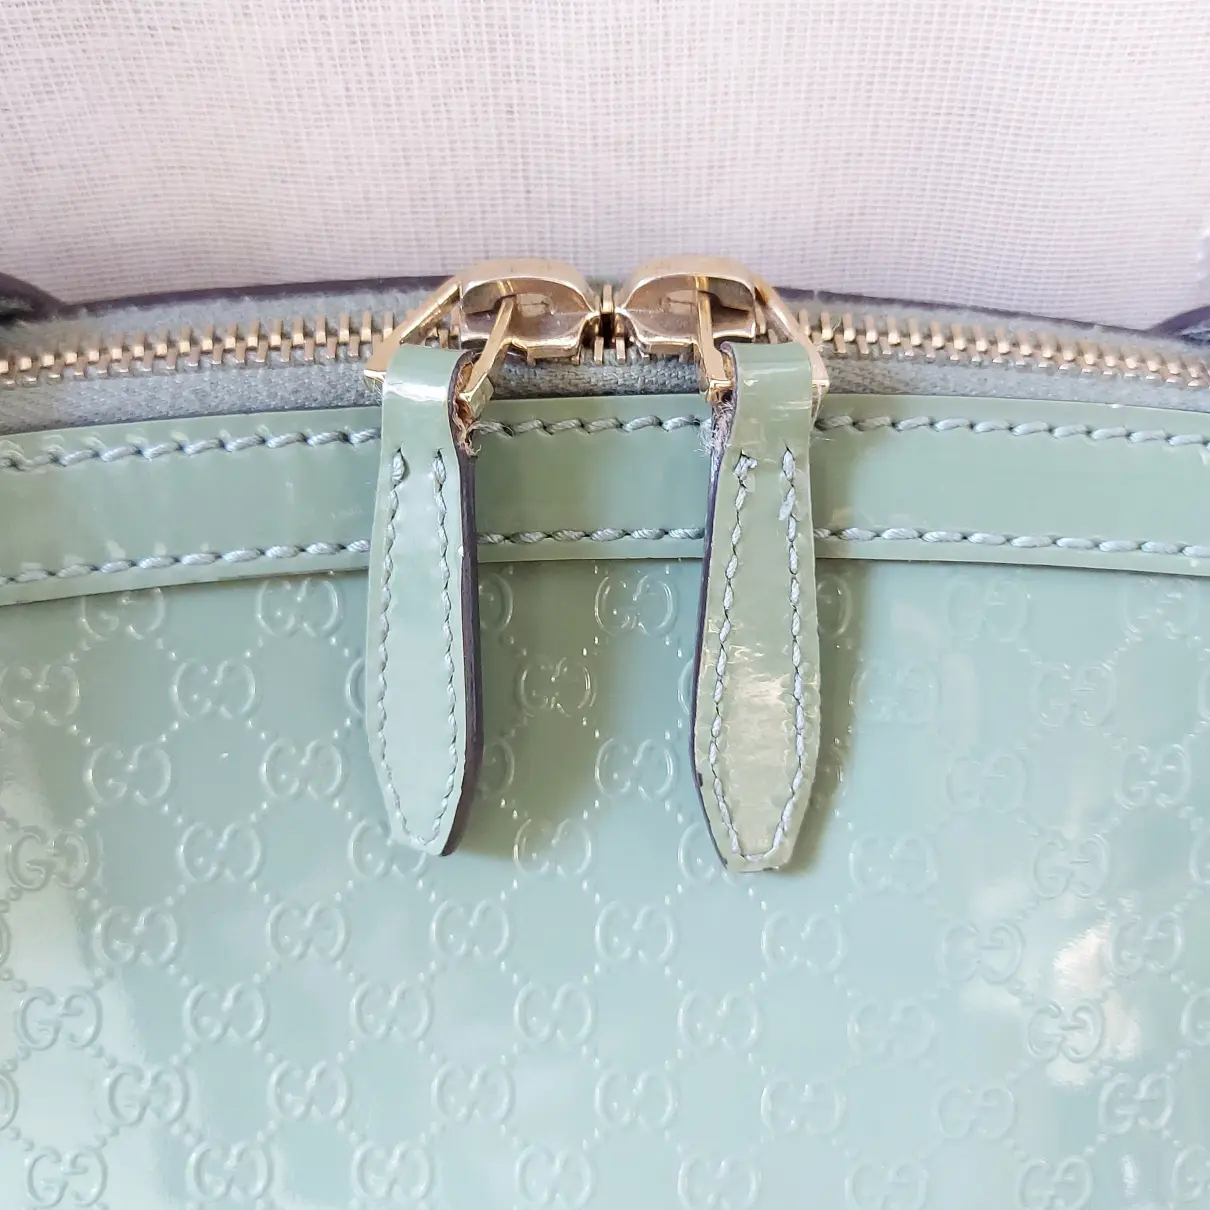 Buy Gucci Patent leather handbag online